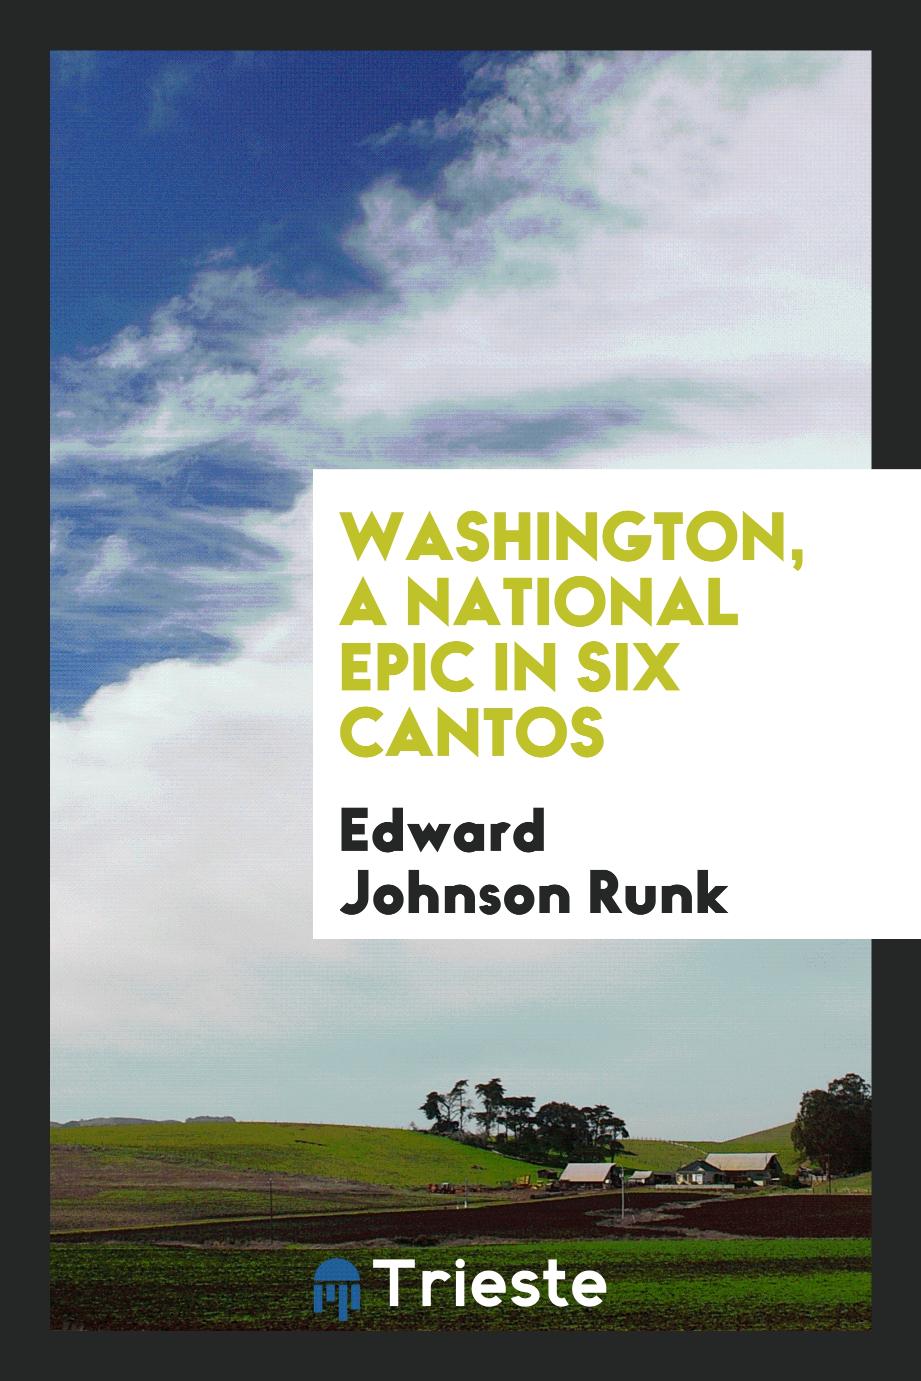 Washington, a national epic in six cantos